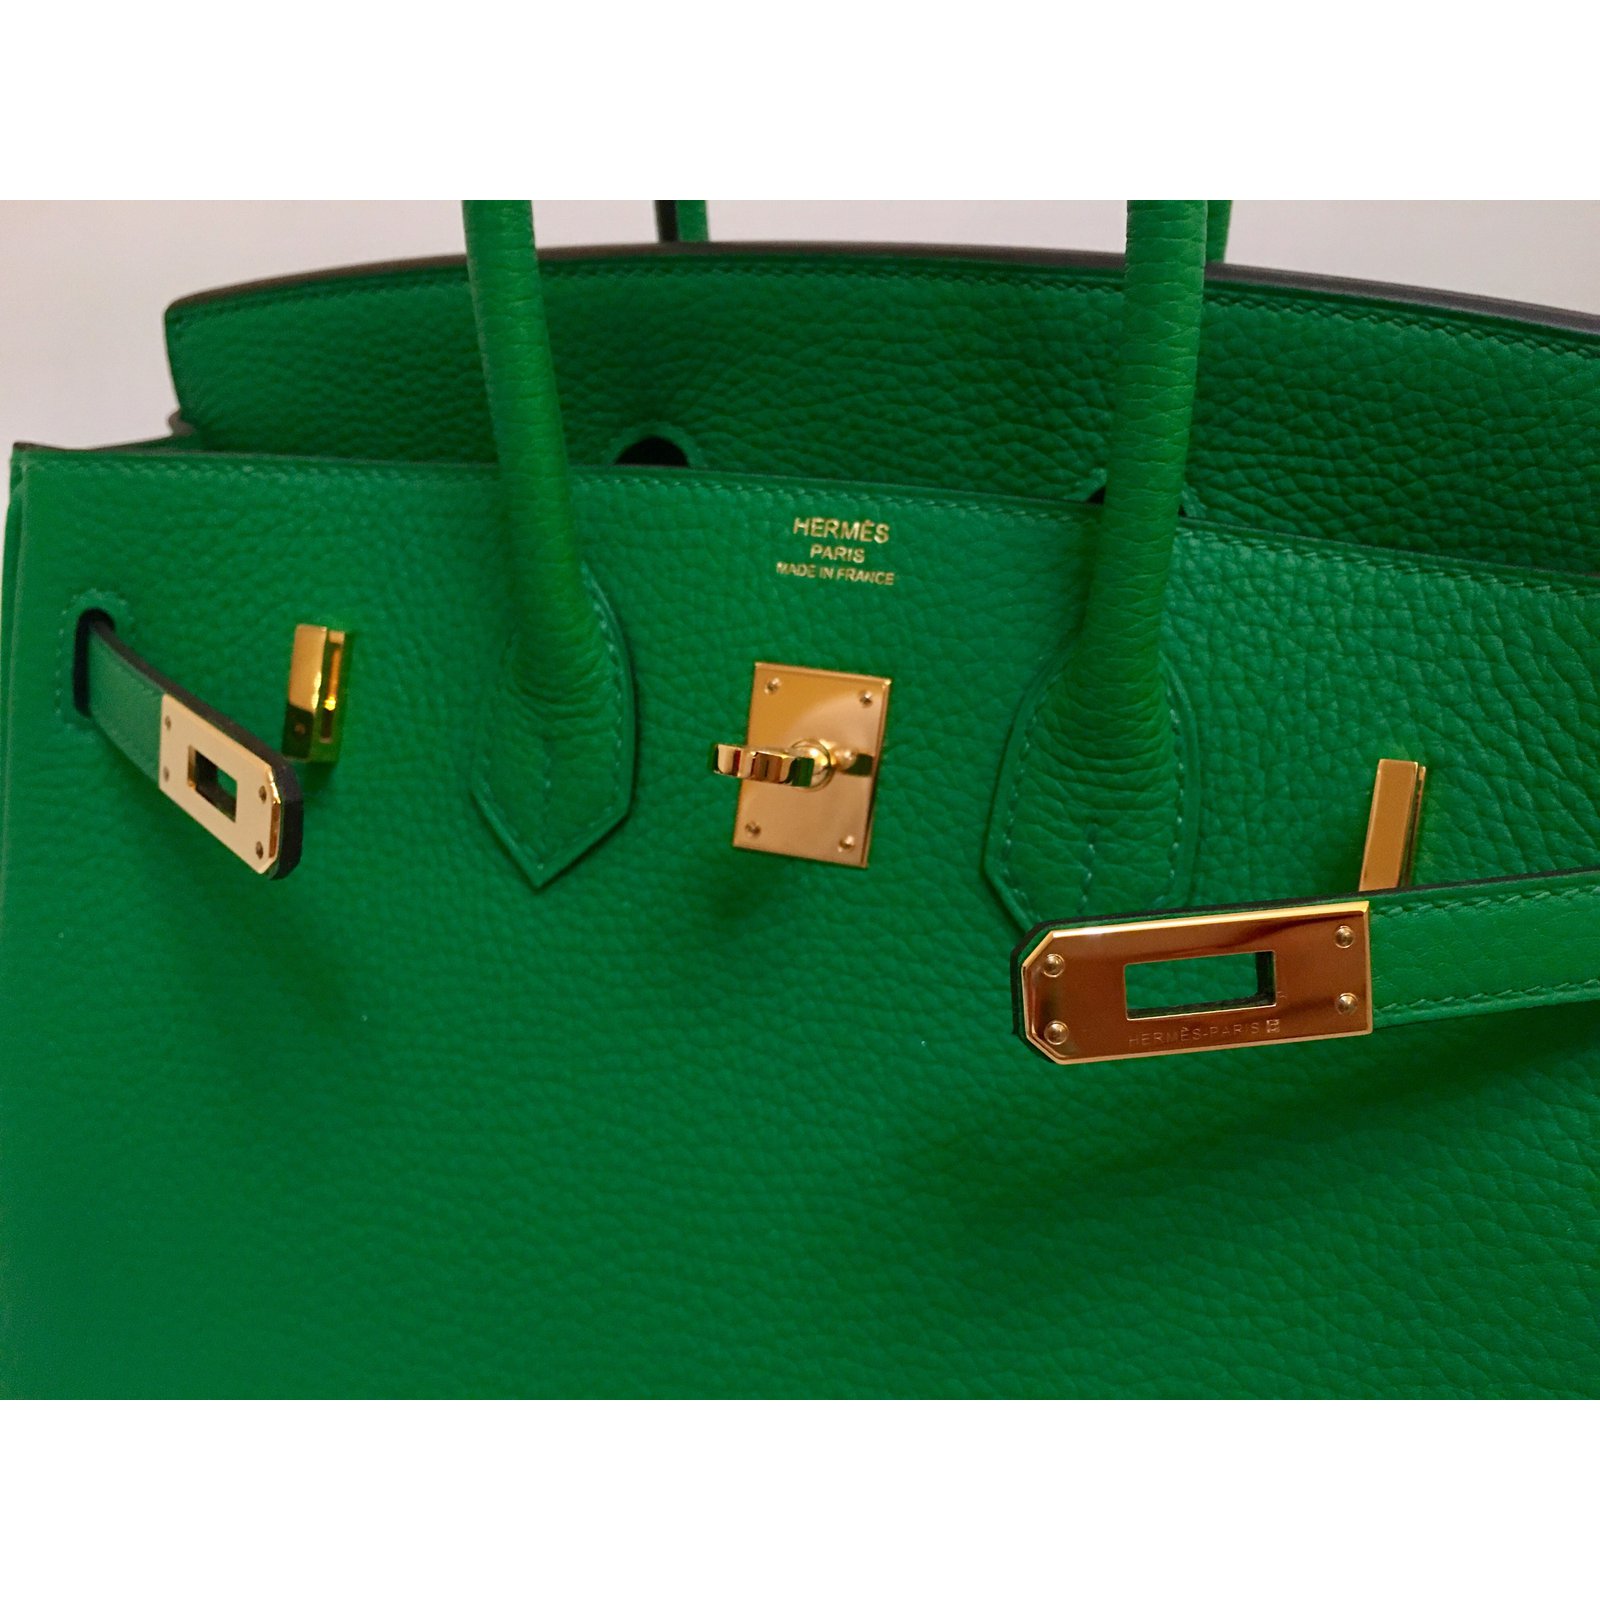 Hermès Hermes Birkin 25cm Bamboo Togo Leather Gold Hardware Green